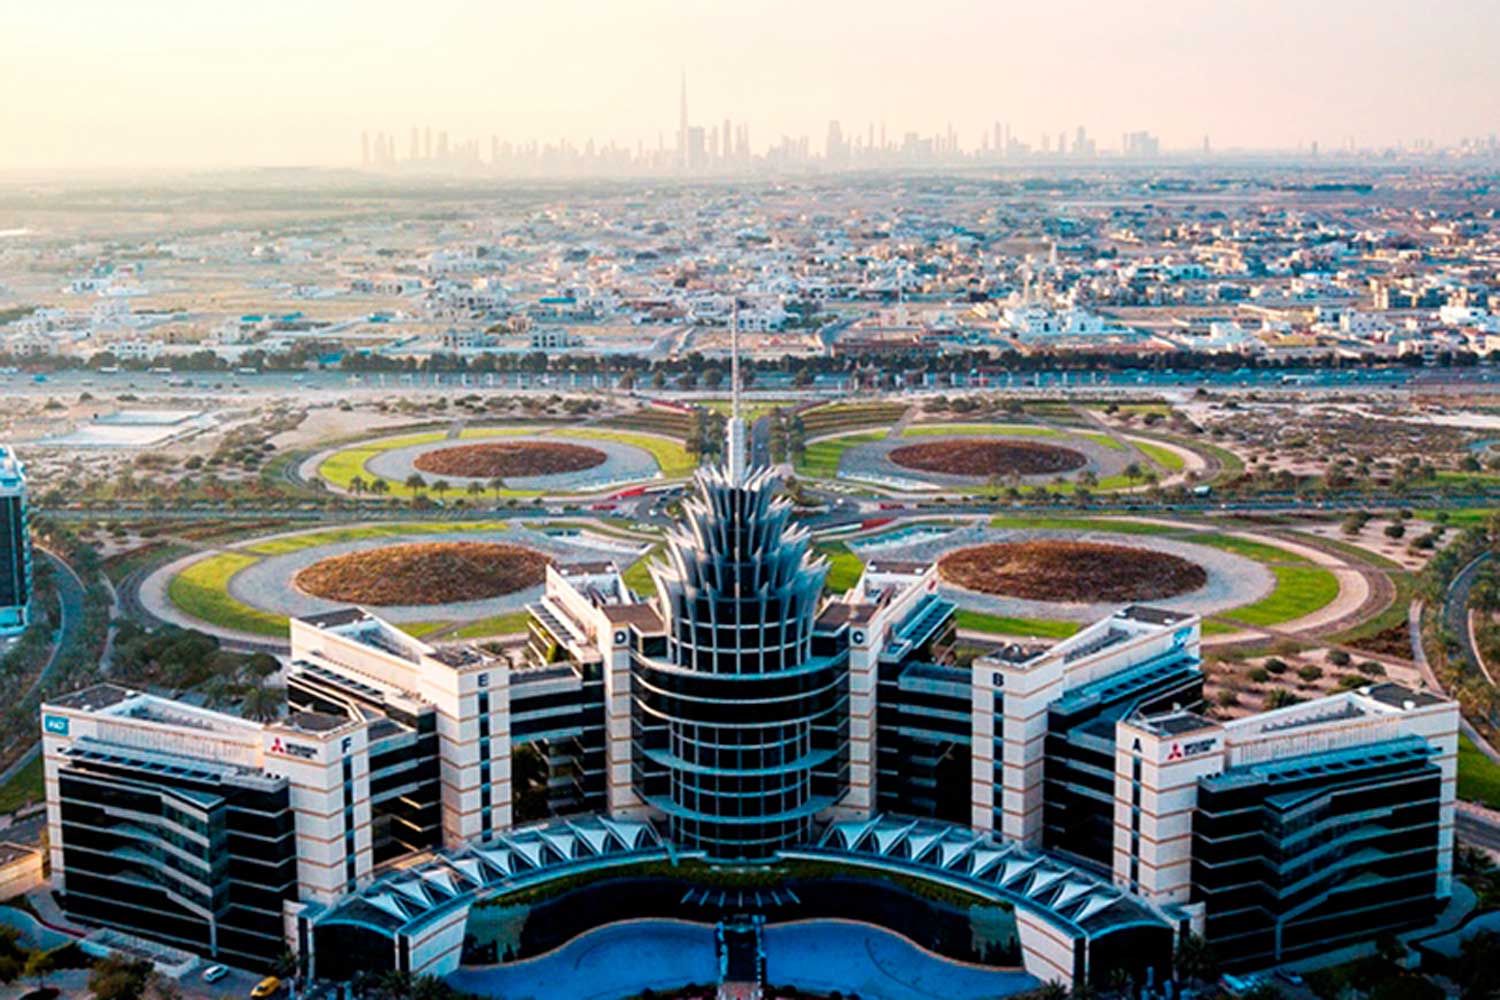 Dubai Silicon Oasis